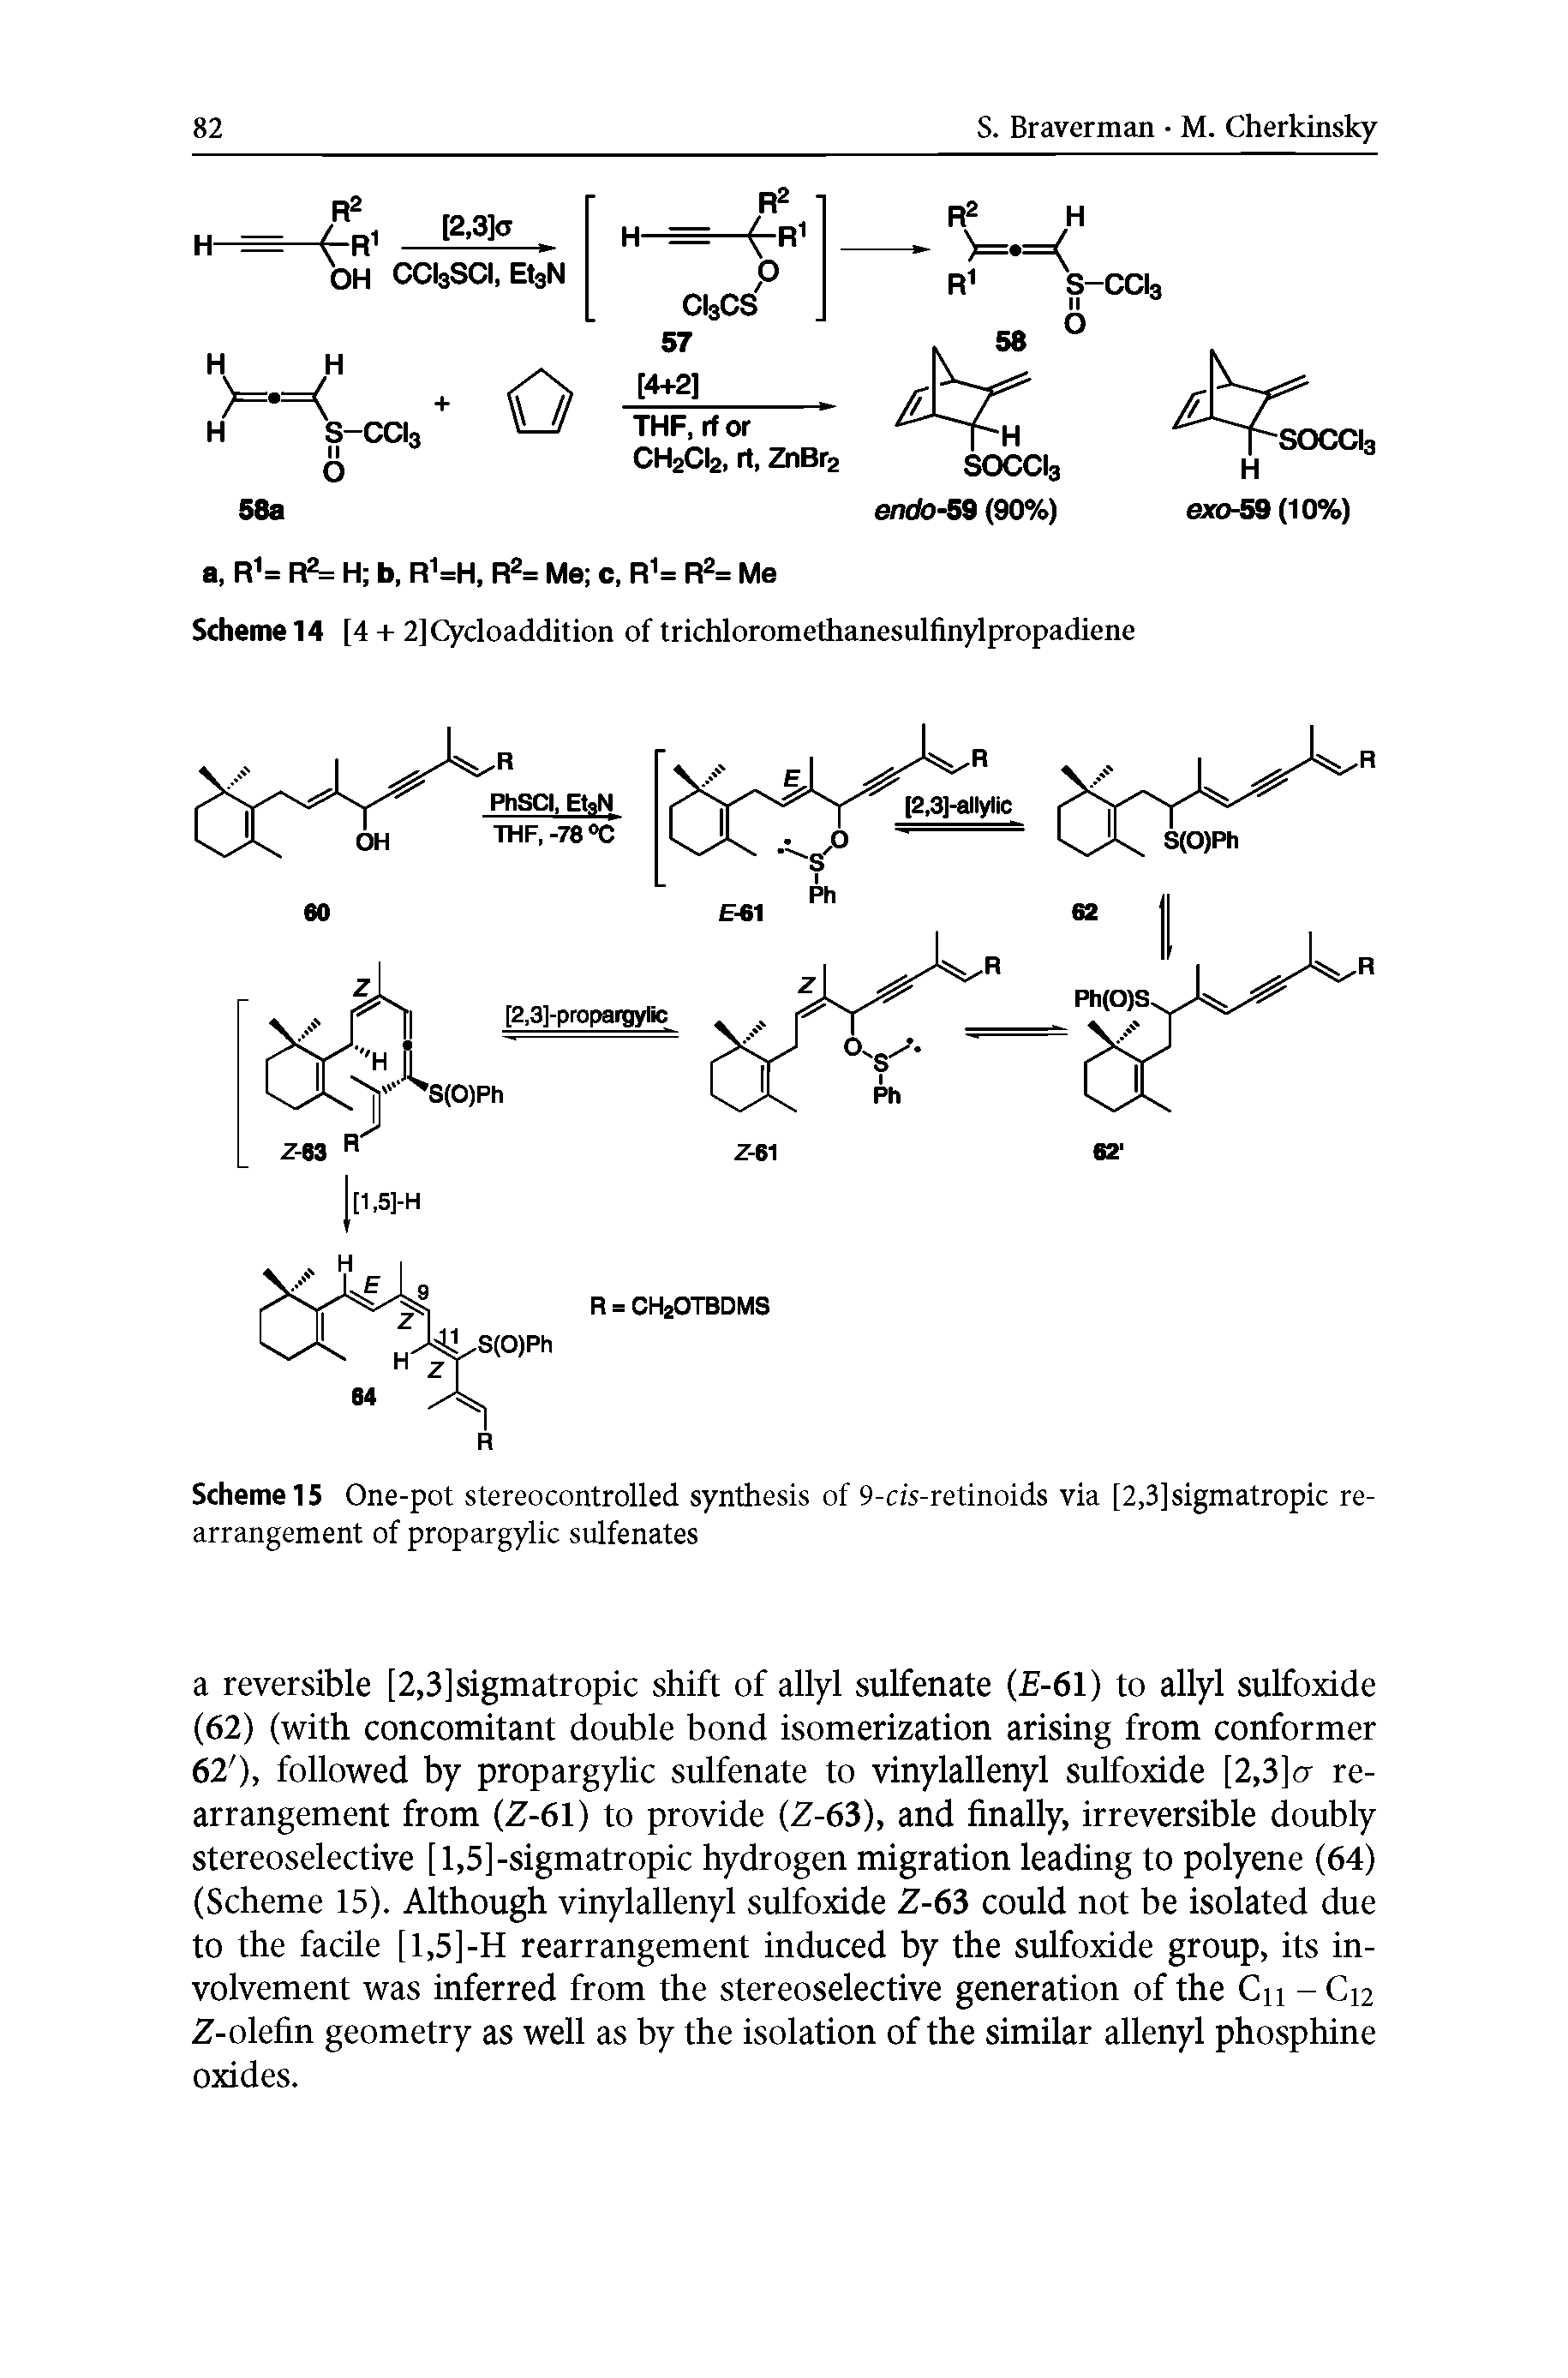 Scheme 15 One-pot stereocontrolled synthesis of 9-cis-retinoids via [2,3]sigmatropic rearrangement of propargylic sulfenates...